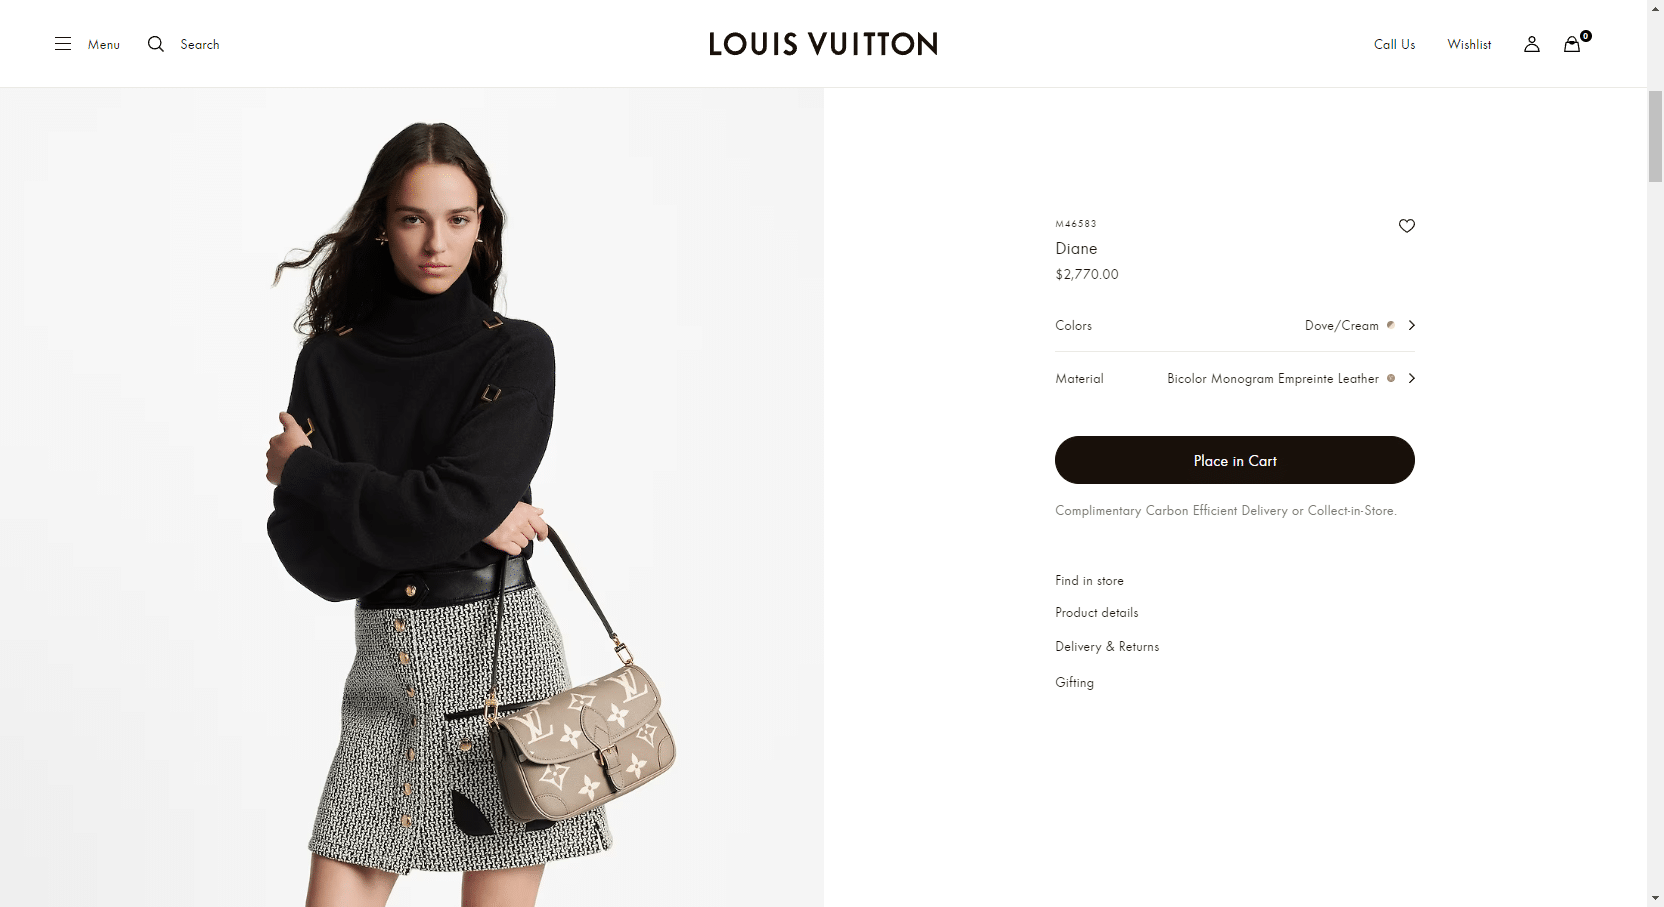 Diane-Bicolor-Monogram-Empreinte-Leather-Women-Handbags-LOUIS-VUITTON-.png